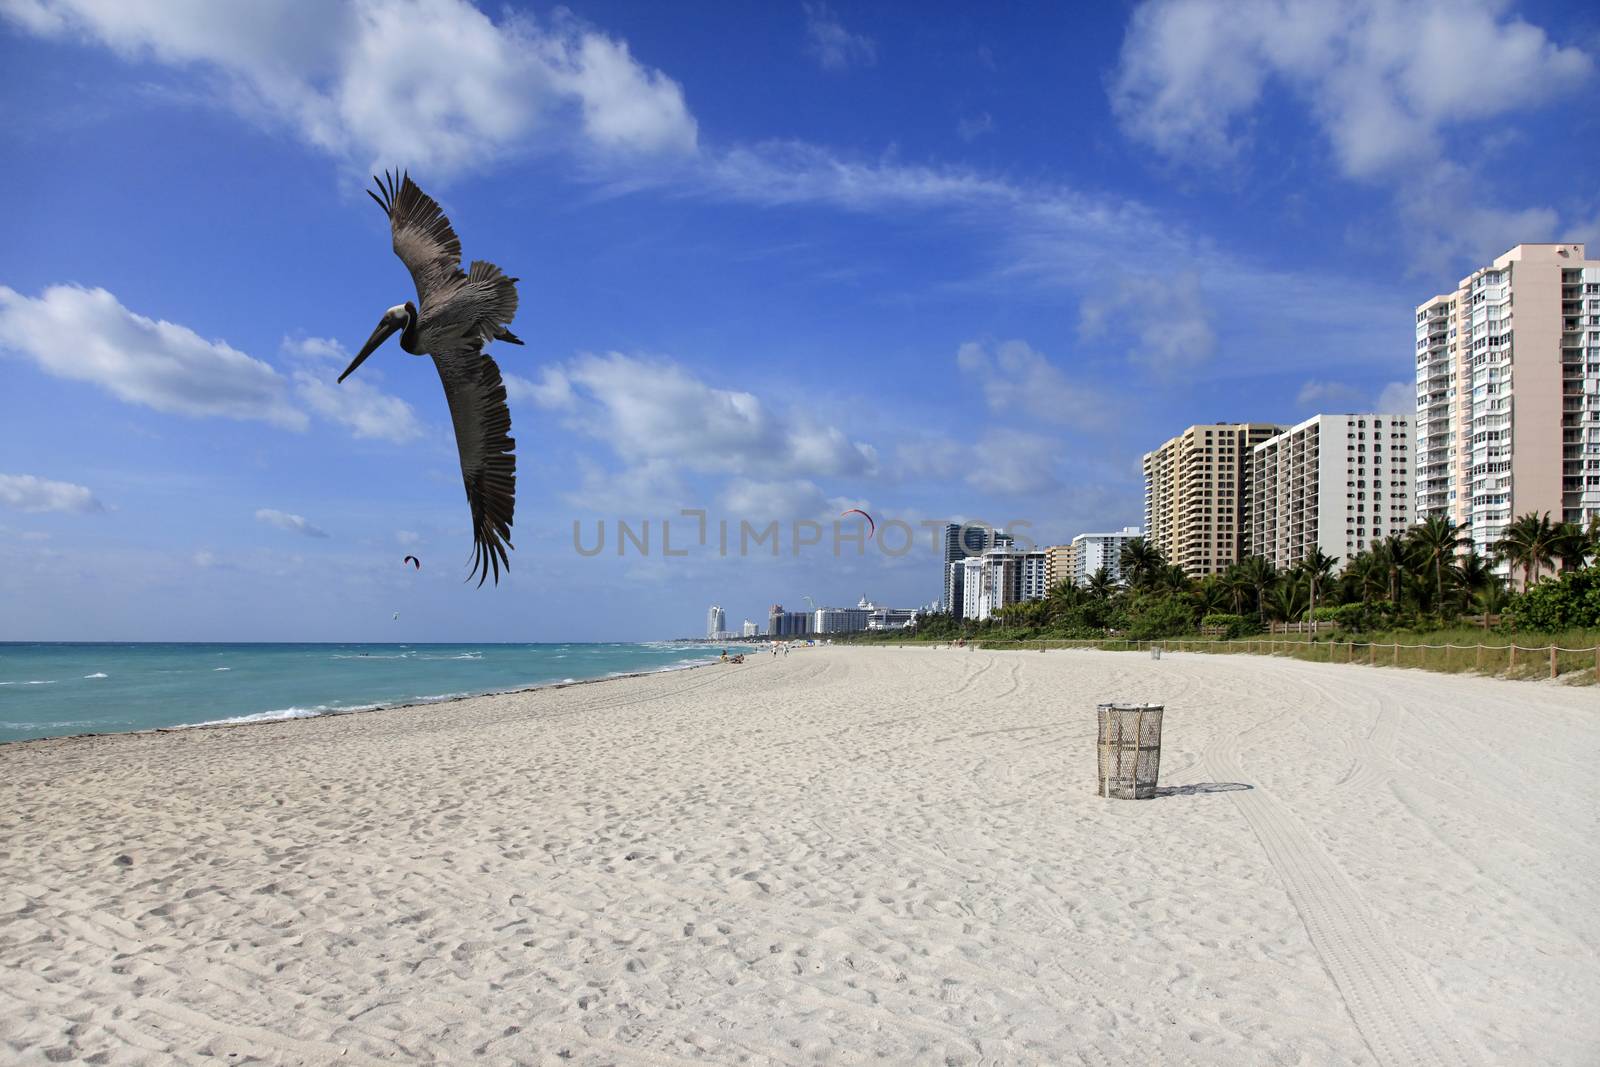 Miami, Florida - May 14, 2013: View of the South Beach shoreline 14 May 2013 in Miami, Florida